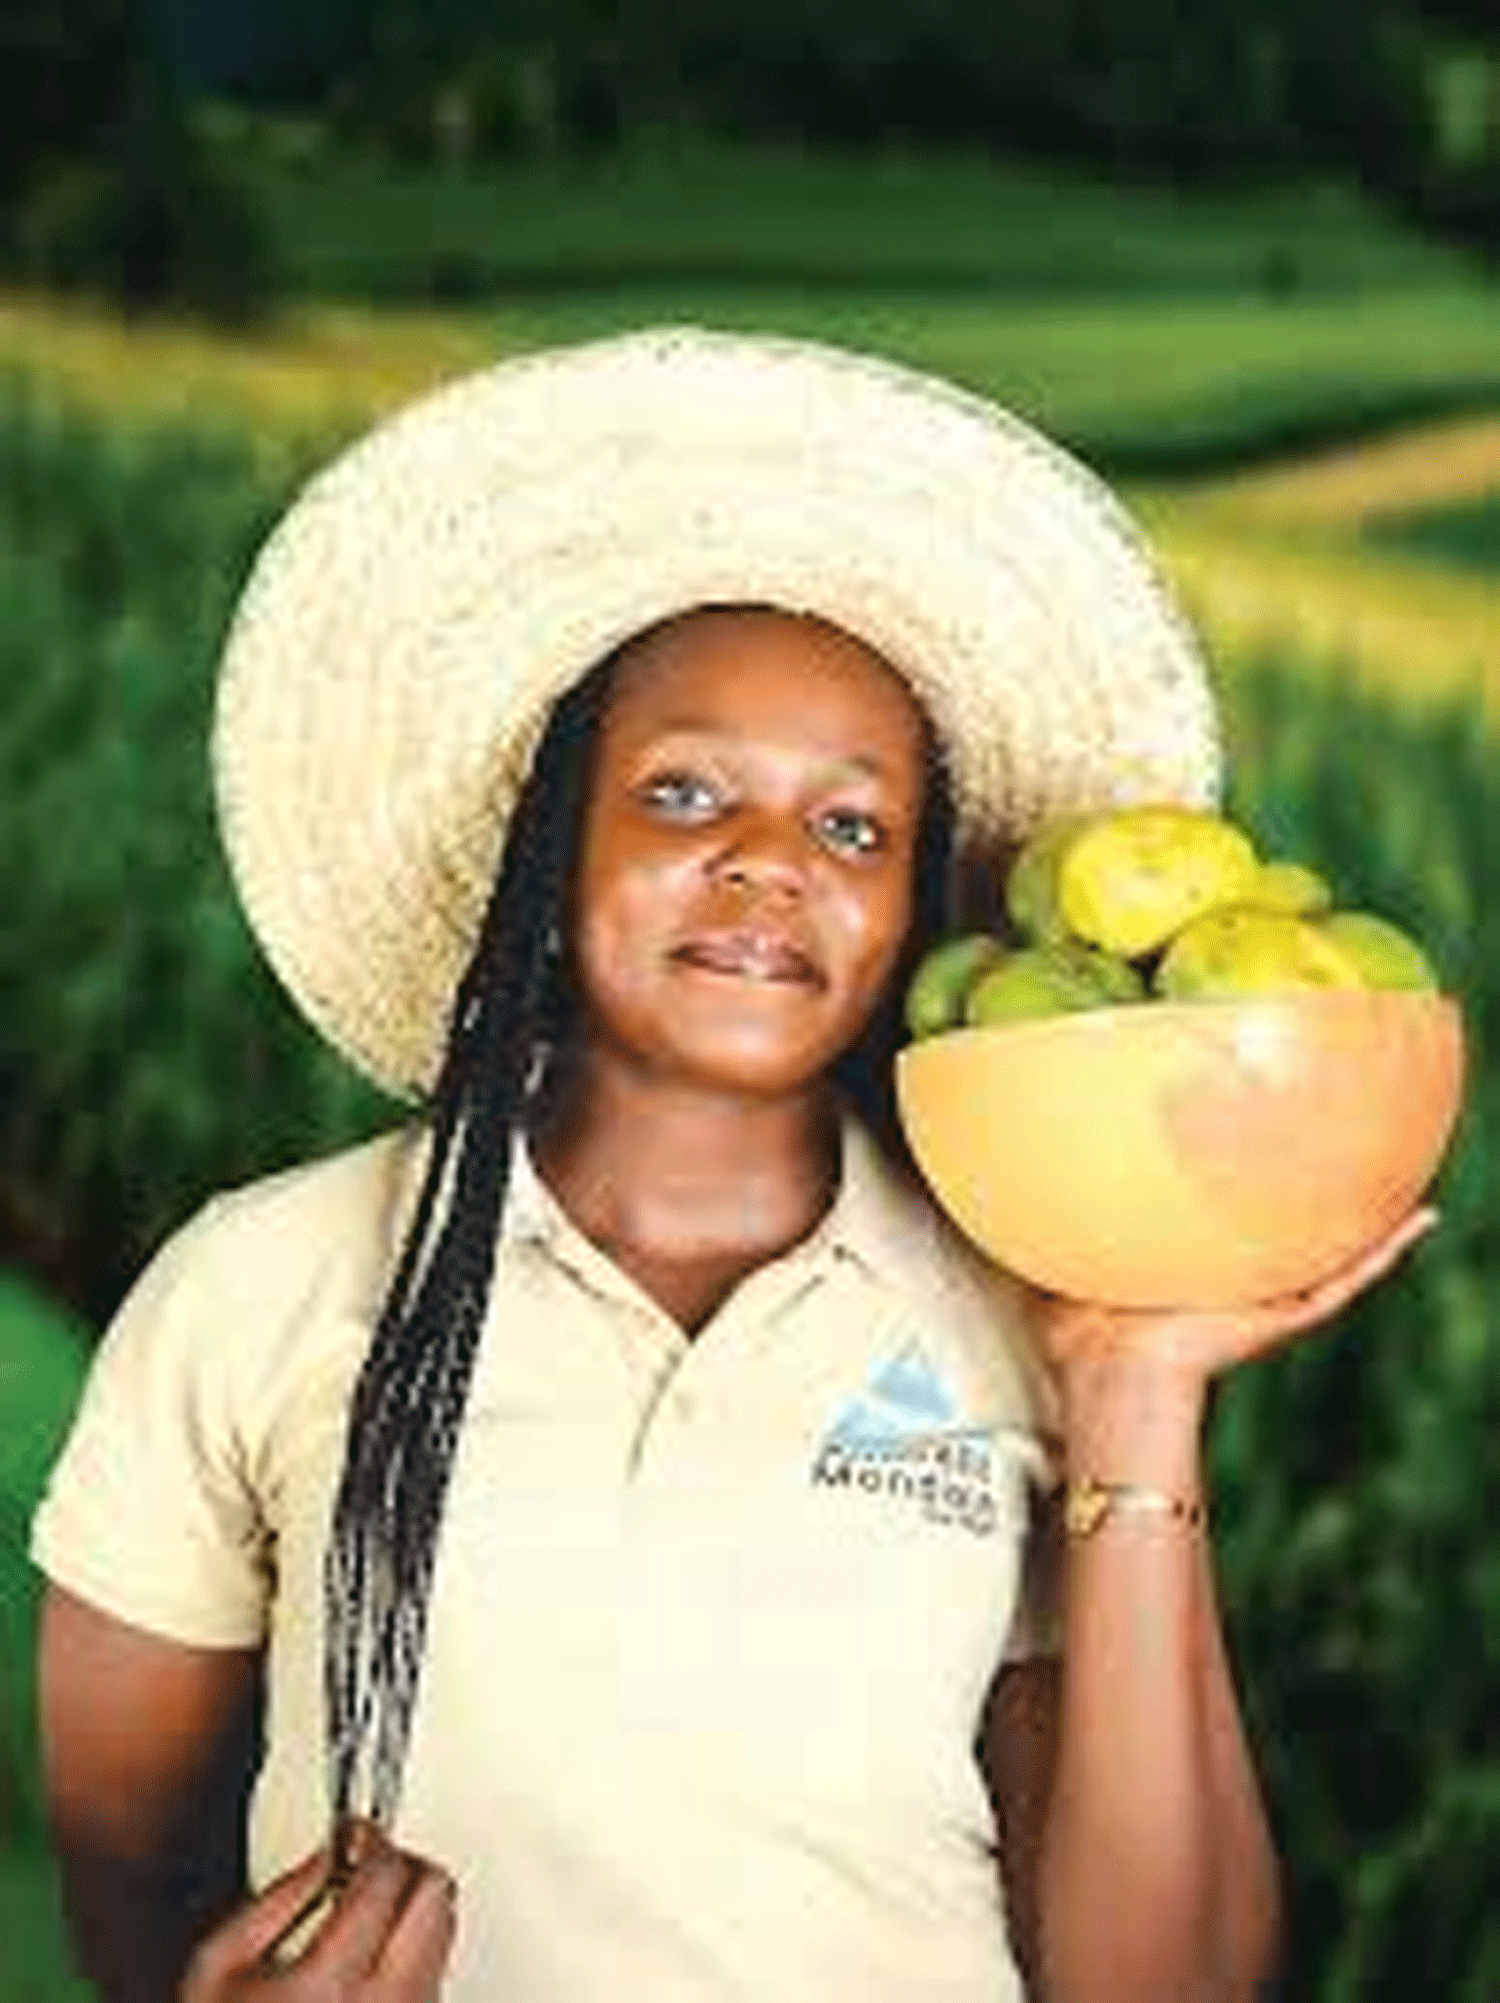 You can be classy, sexy and still be a farmer – Amaka Chukwudum